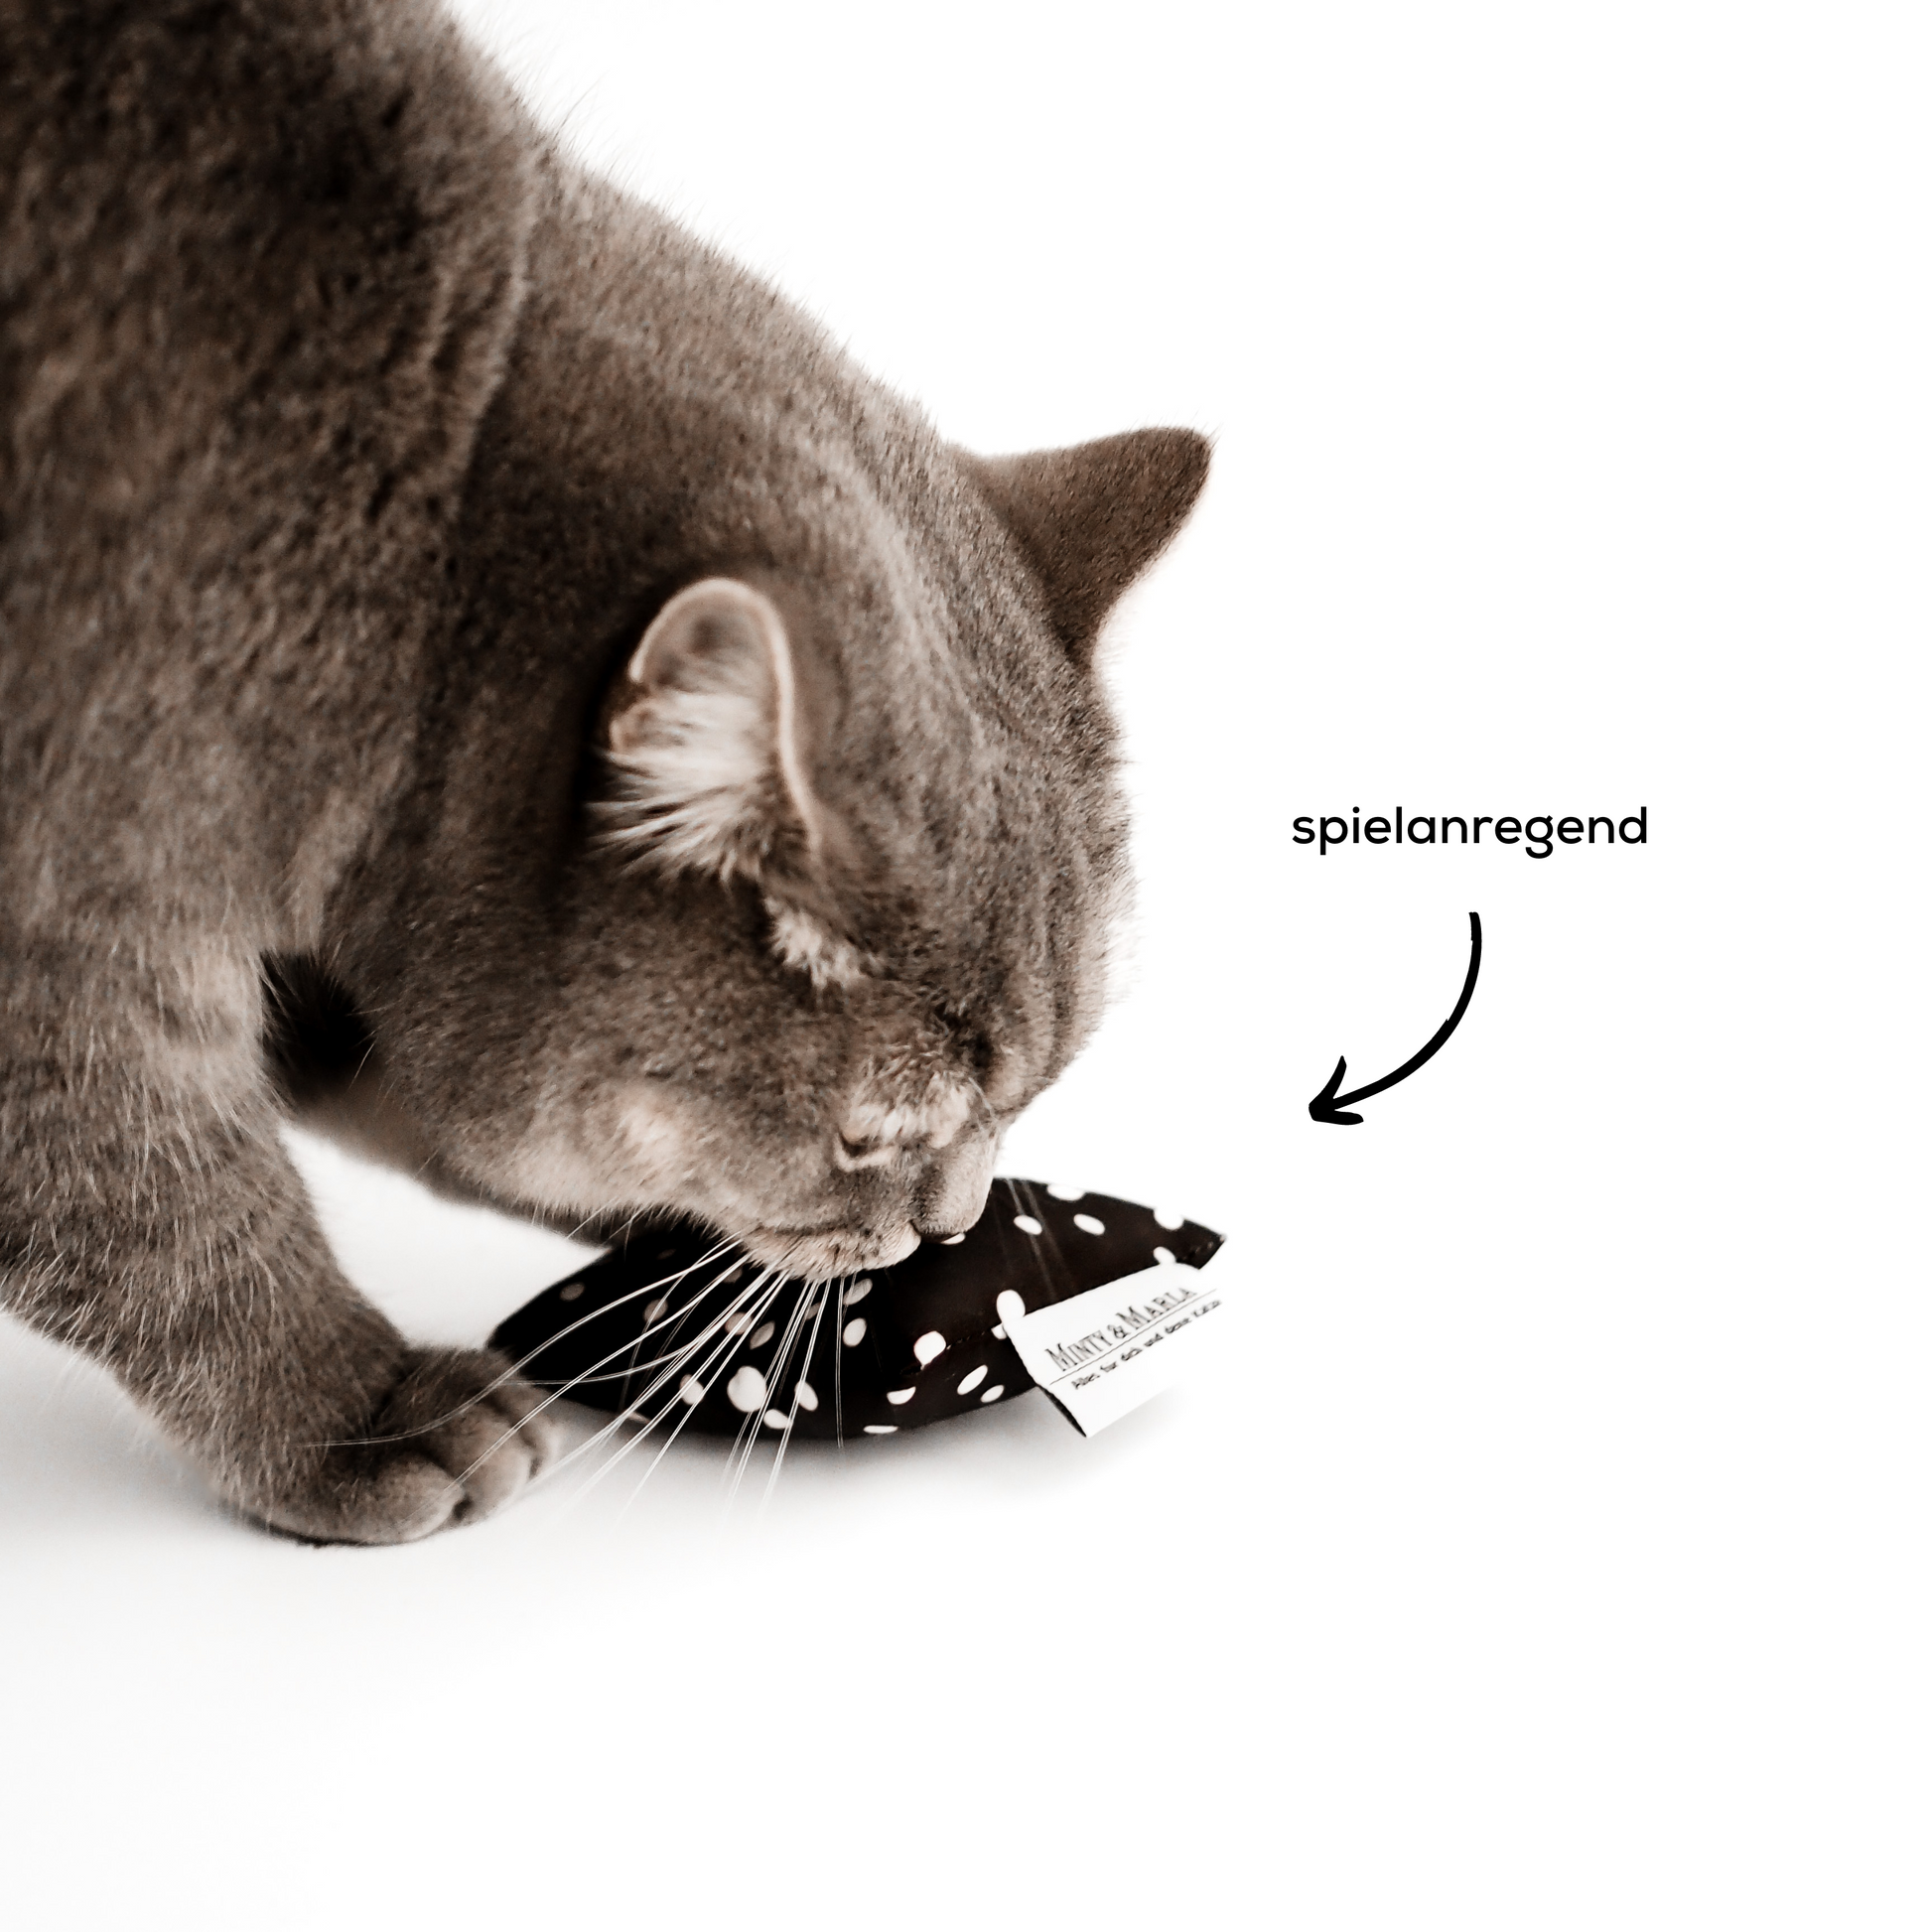 Katze spielt mit Katzenspielzeug aus Katzenminze.